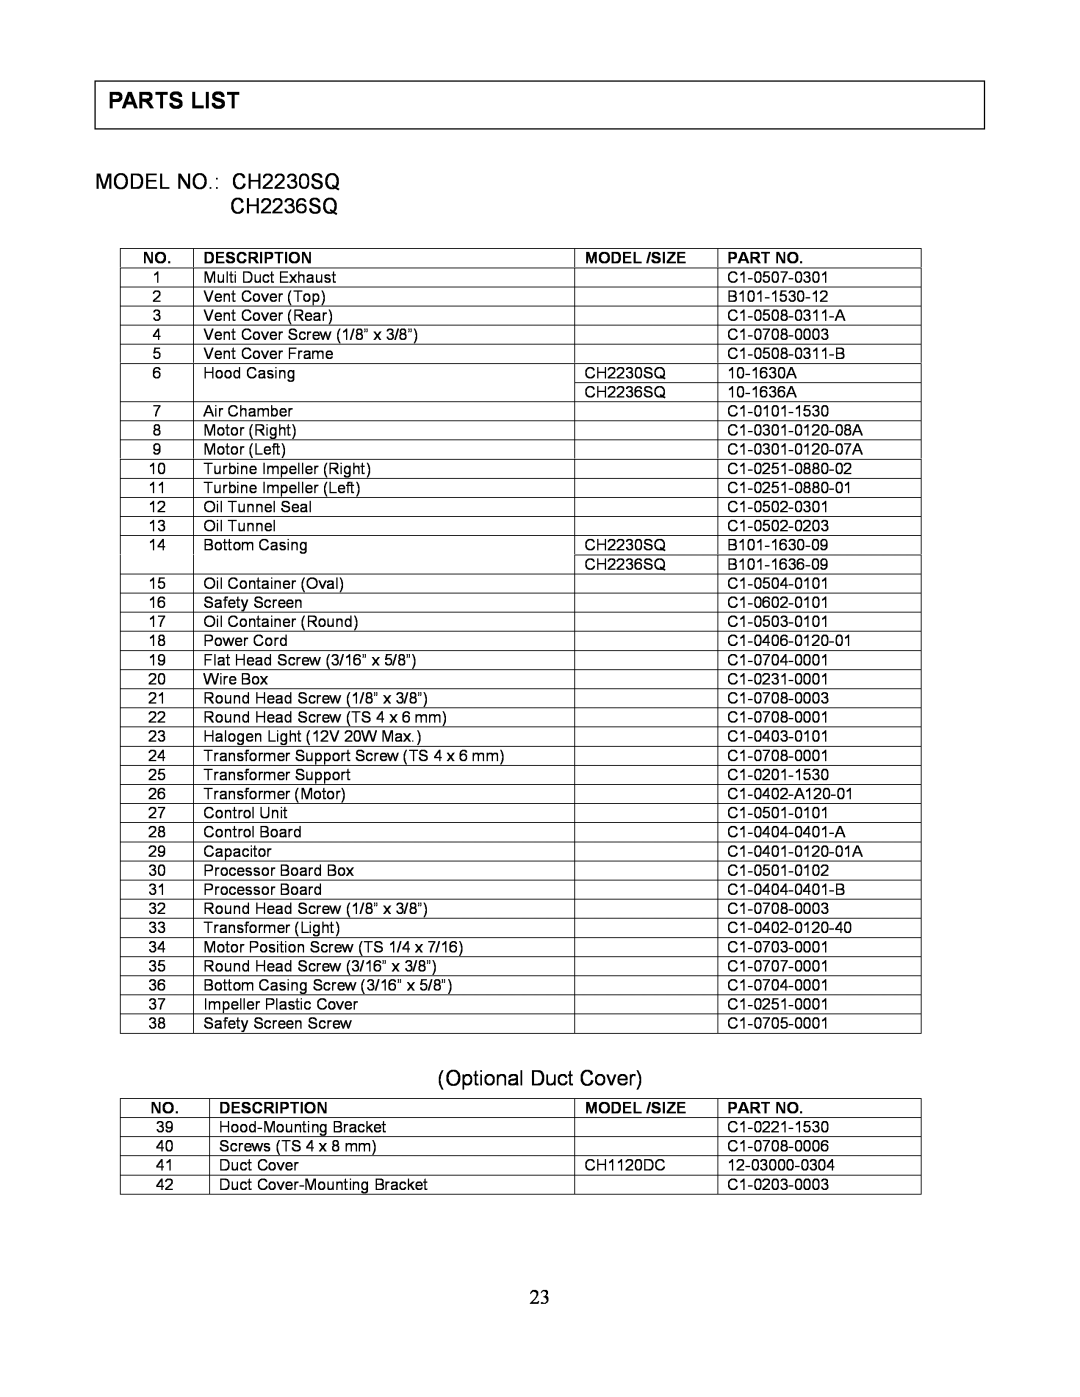 Kobe Range Hoods manual Parts List, MODEL NO. CH2230SQ CH2236SQ, Optional Duct Cover 